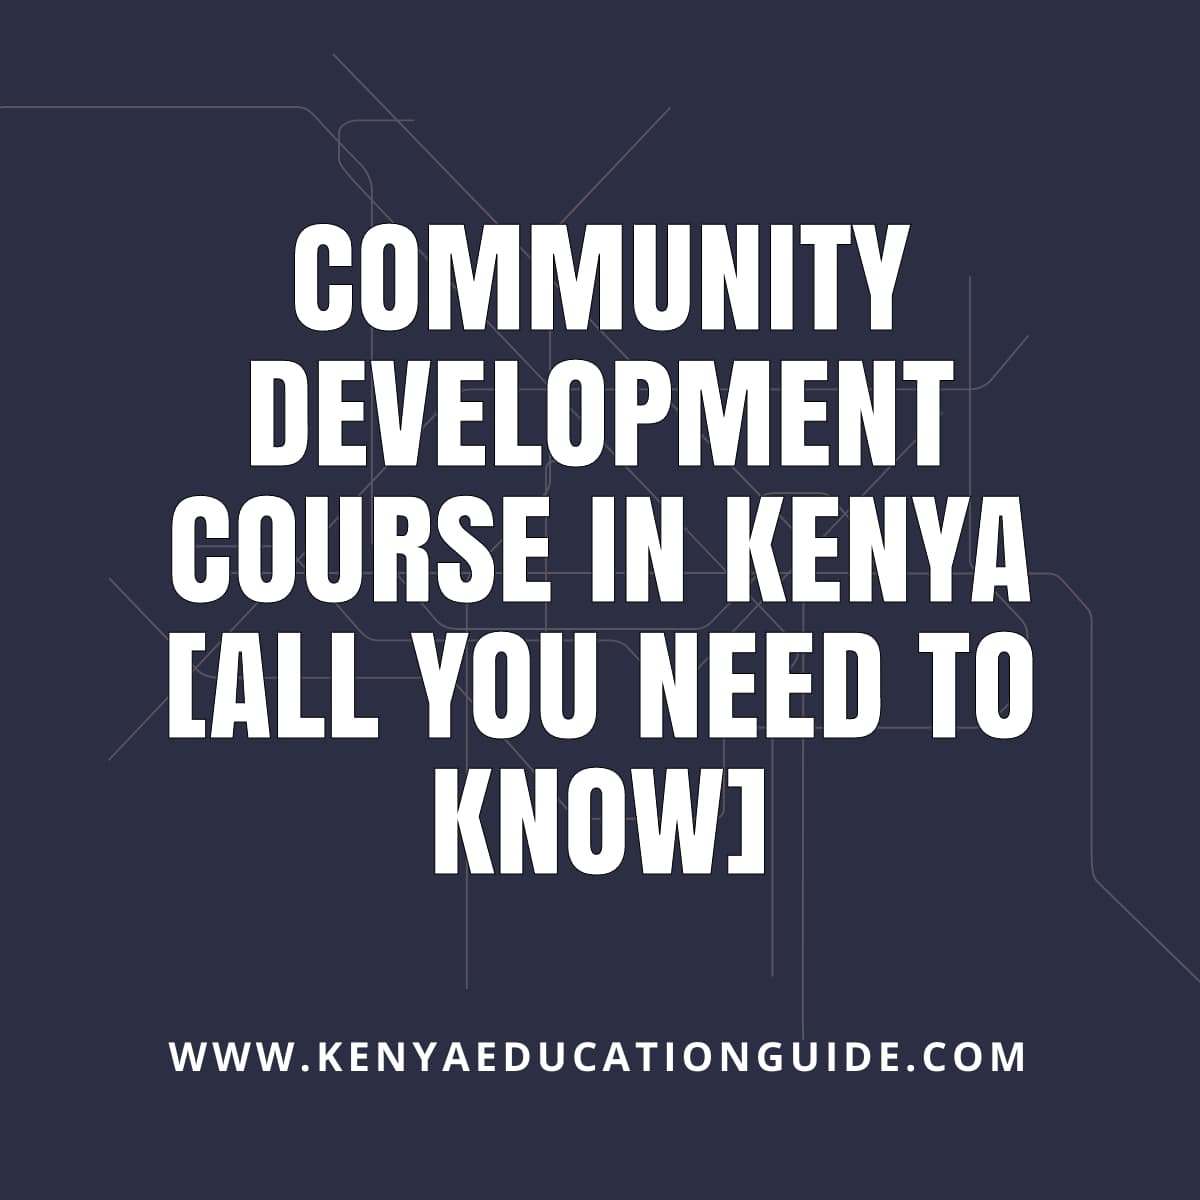 Community Development Course in Kenya